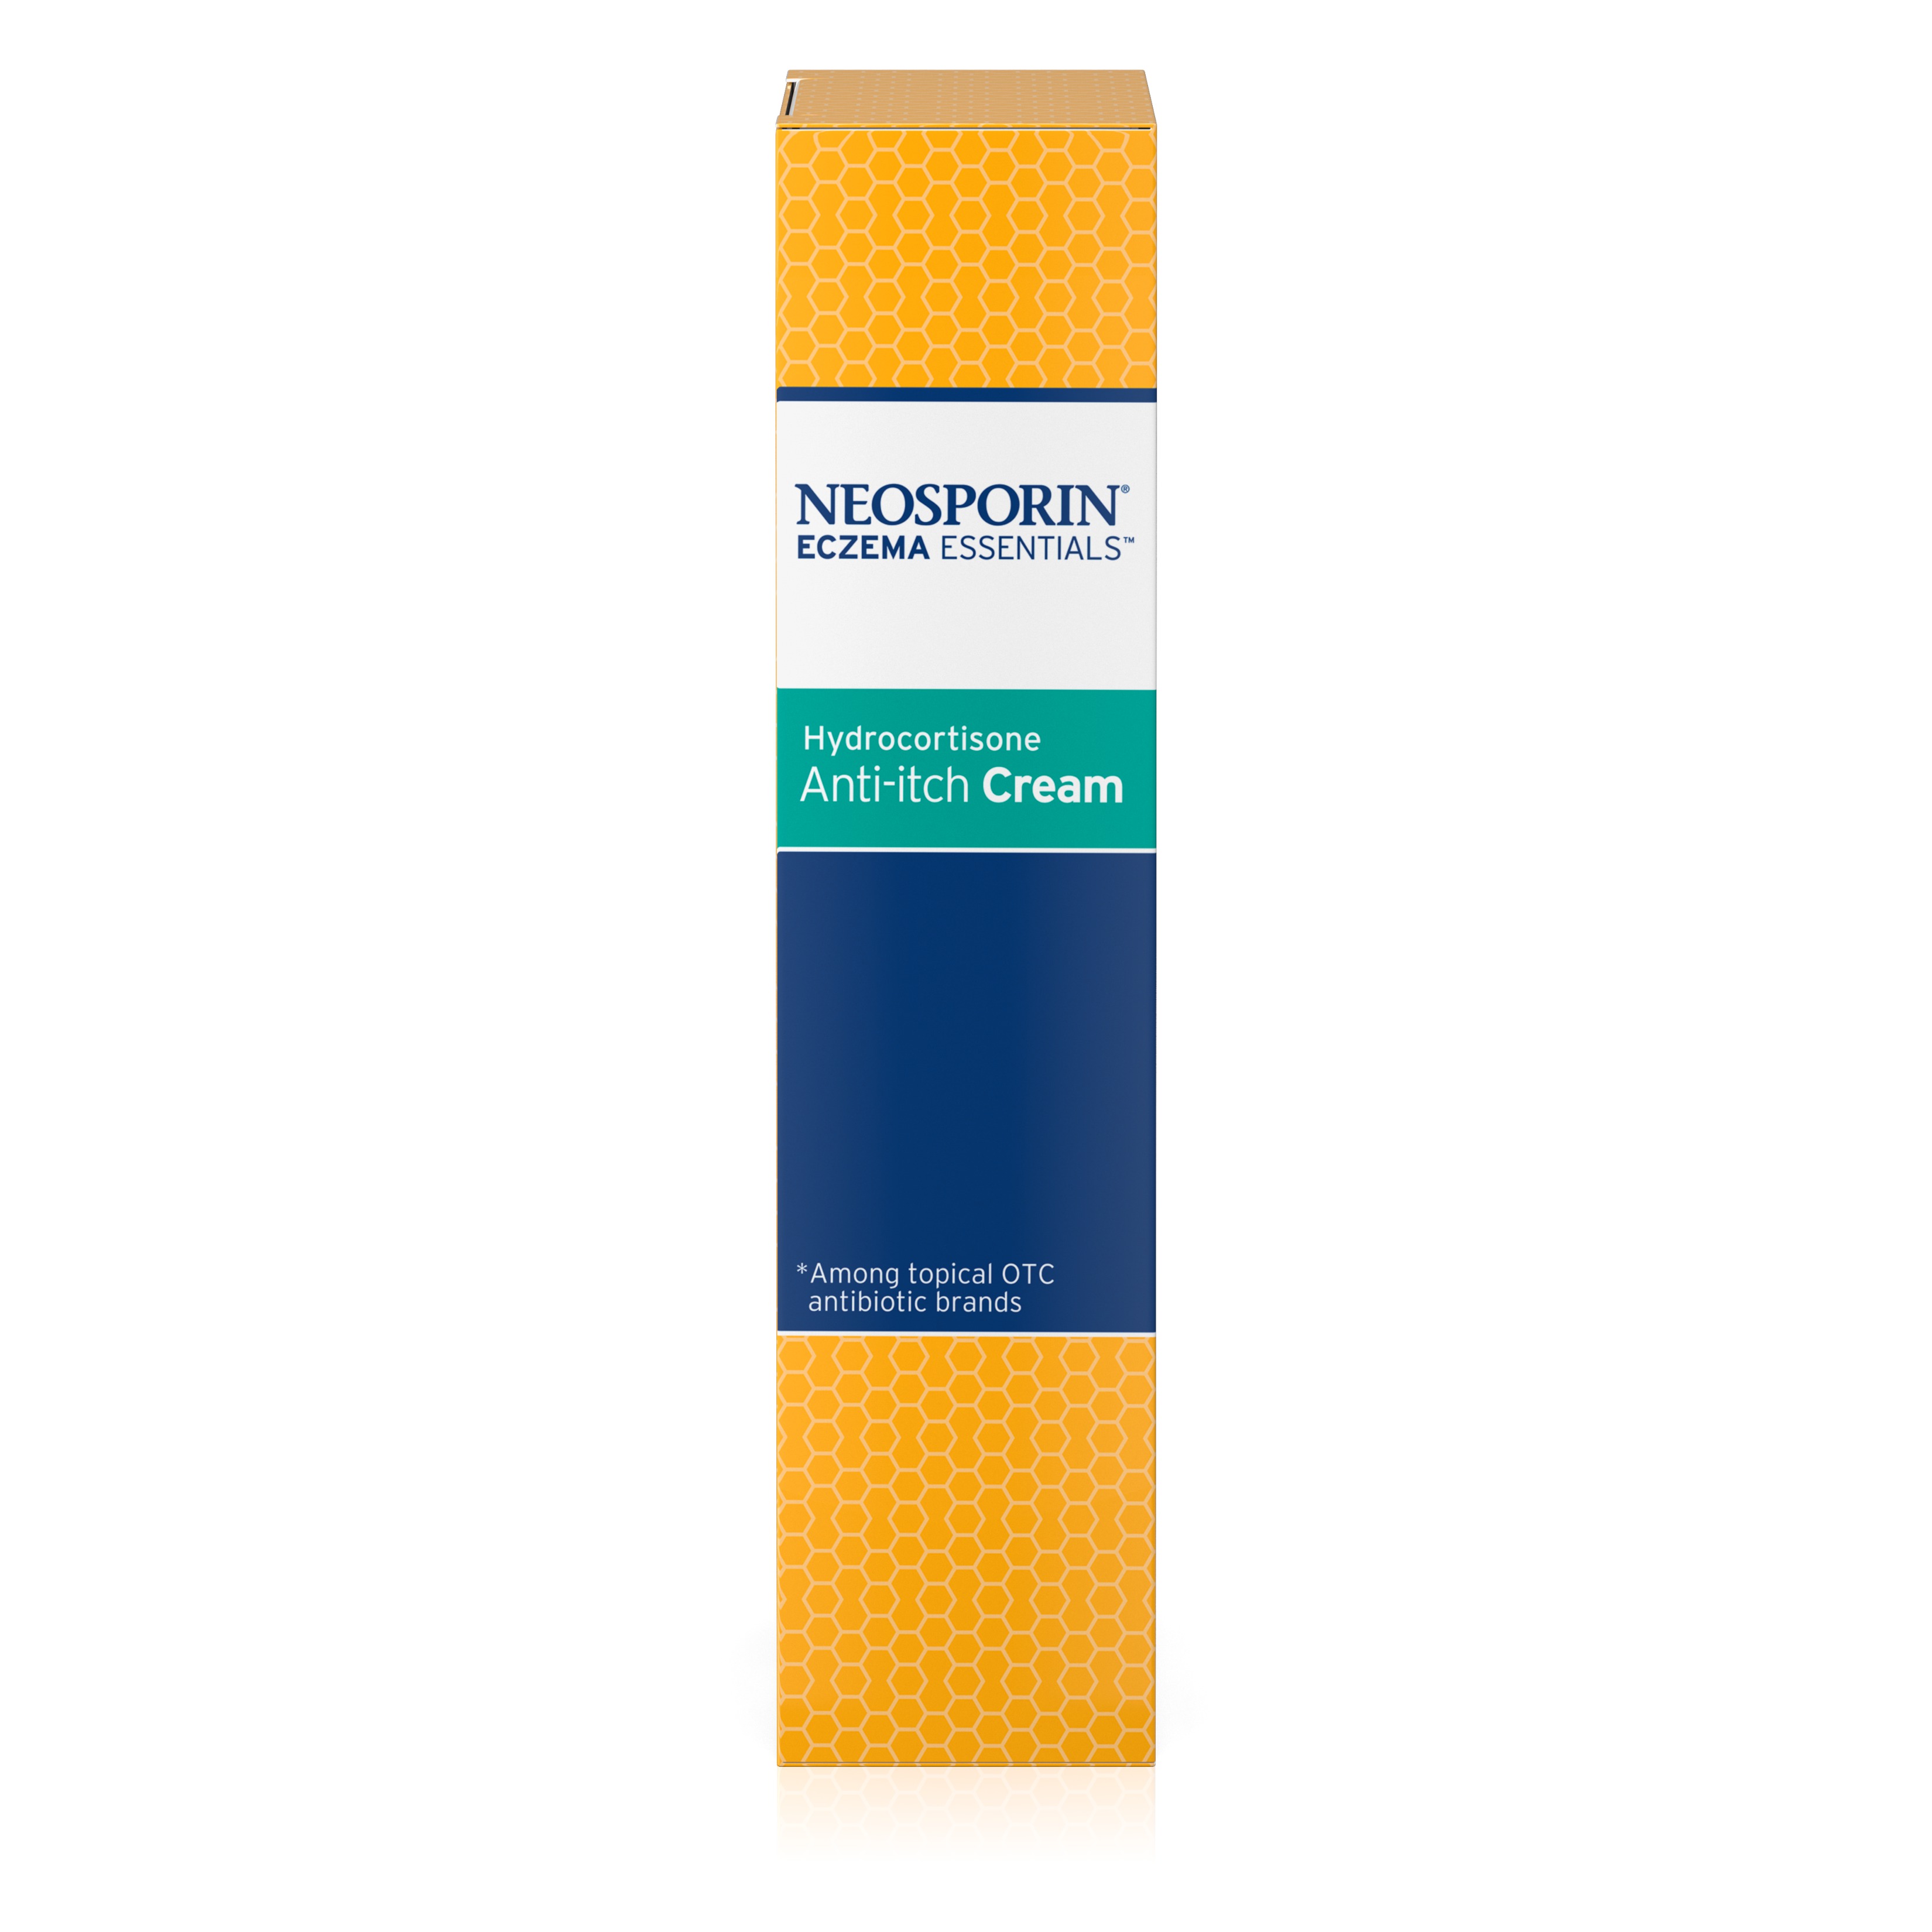 Neosporin Eczema Essentials Hydrocortisone Anti-Itch Cream, 1 Oz - image 3 of 6